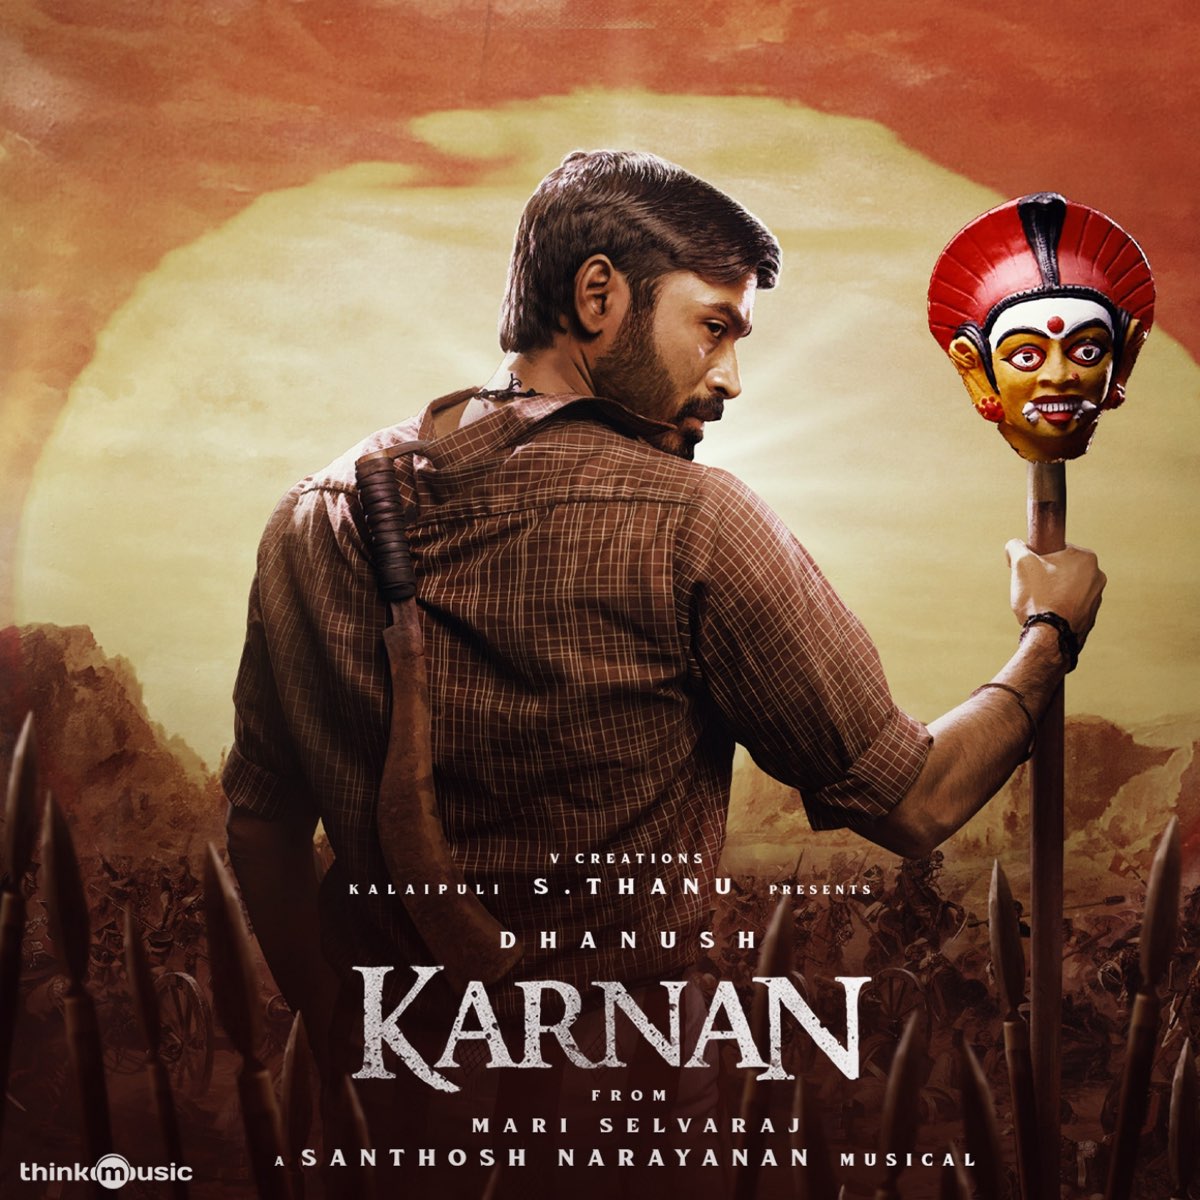 abdul aliff add karna tamil movie download photo